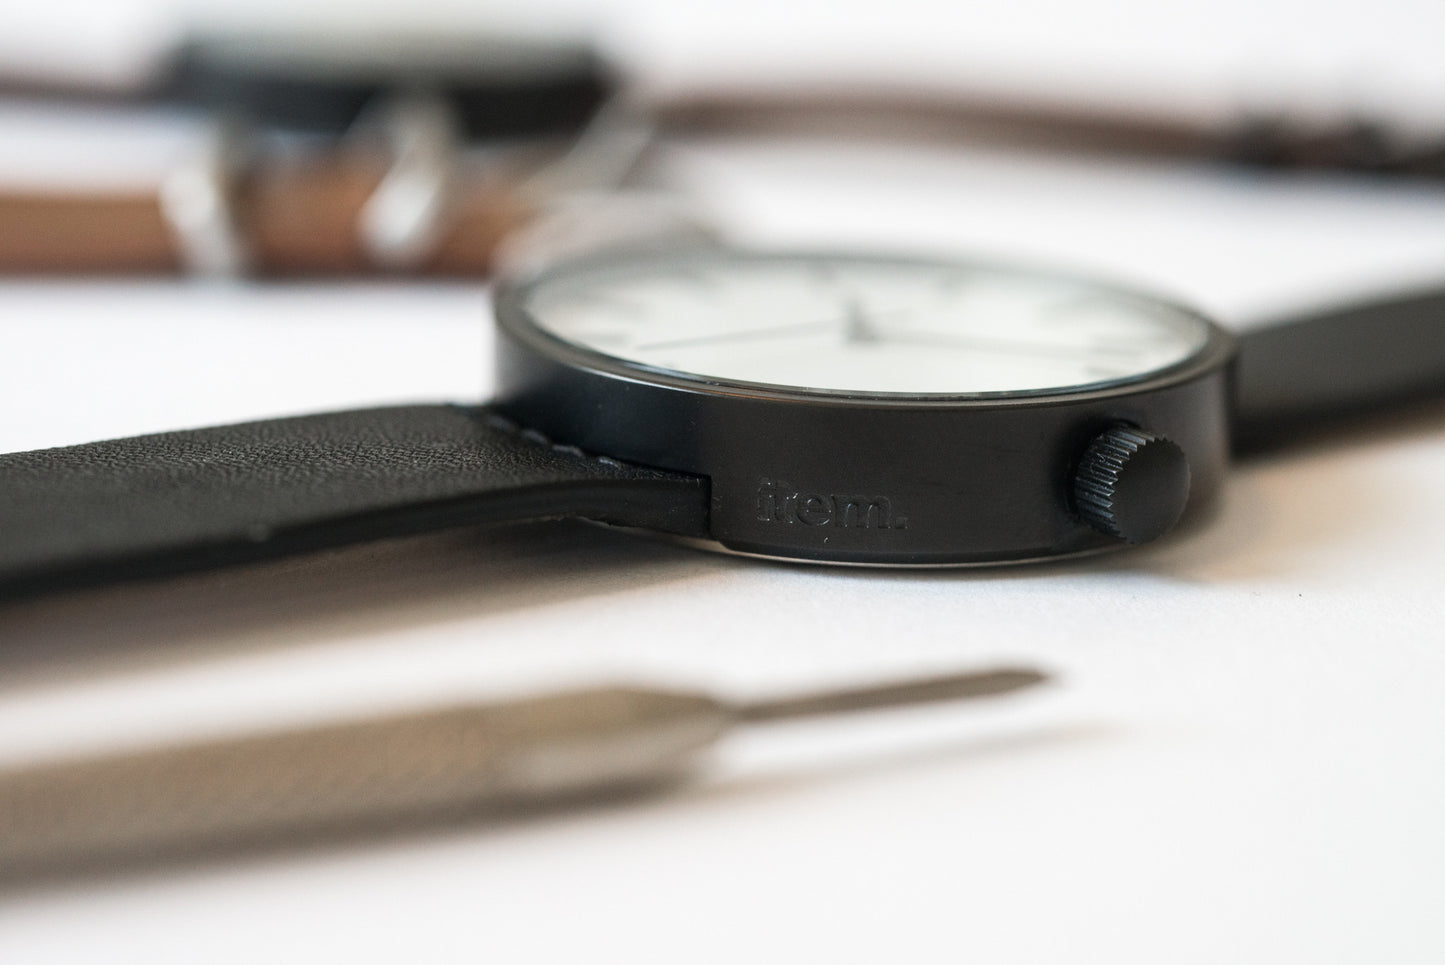 ITEM #002: Charcoal Wrist Watch